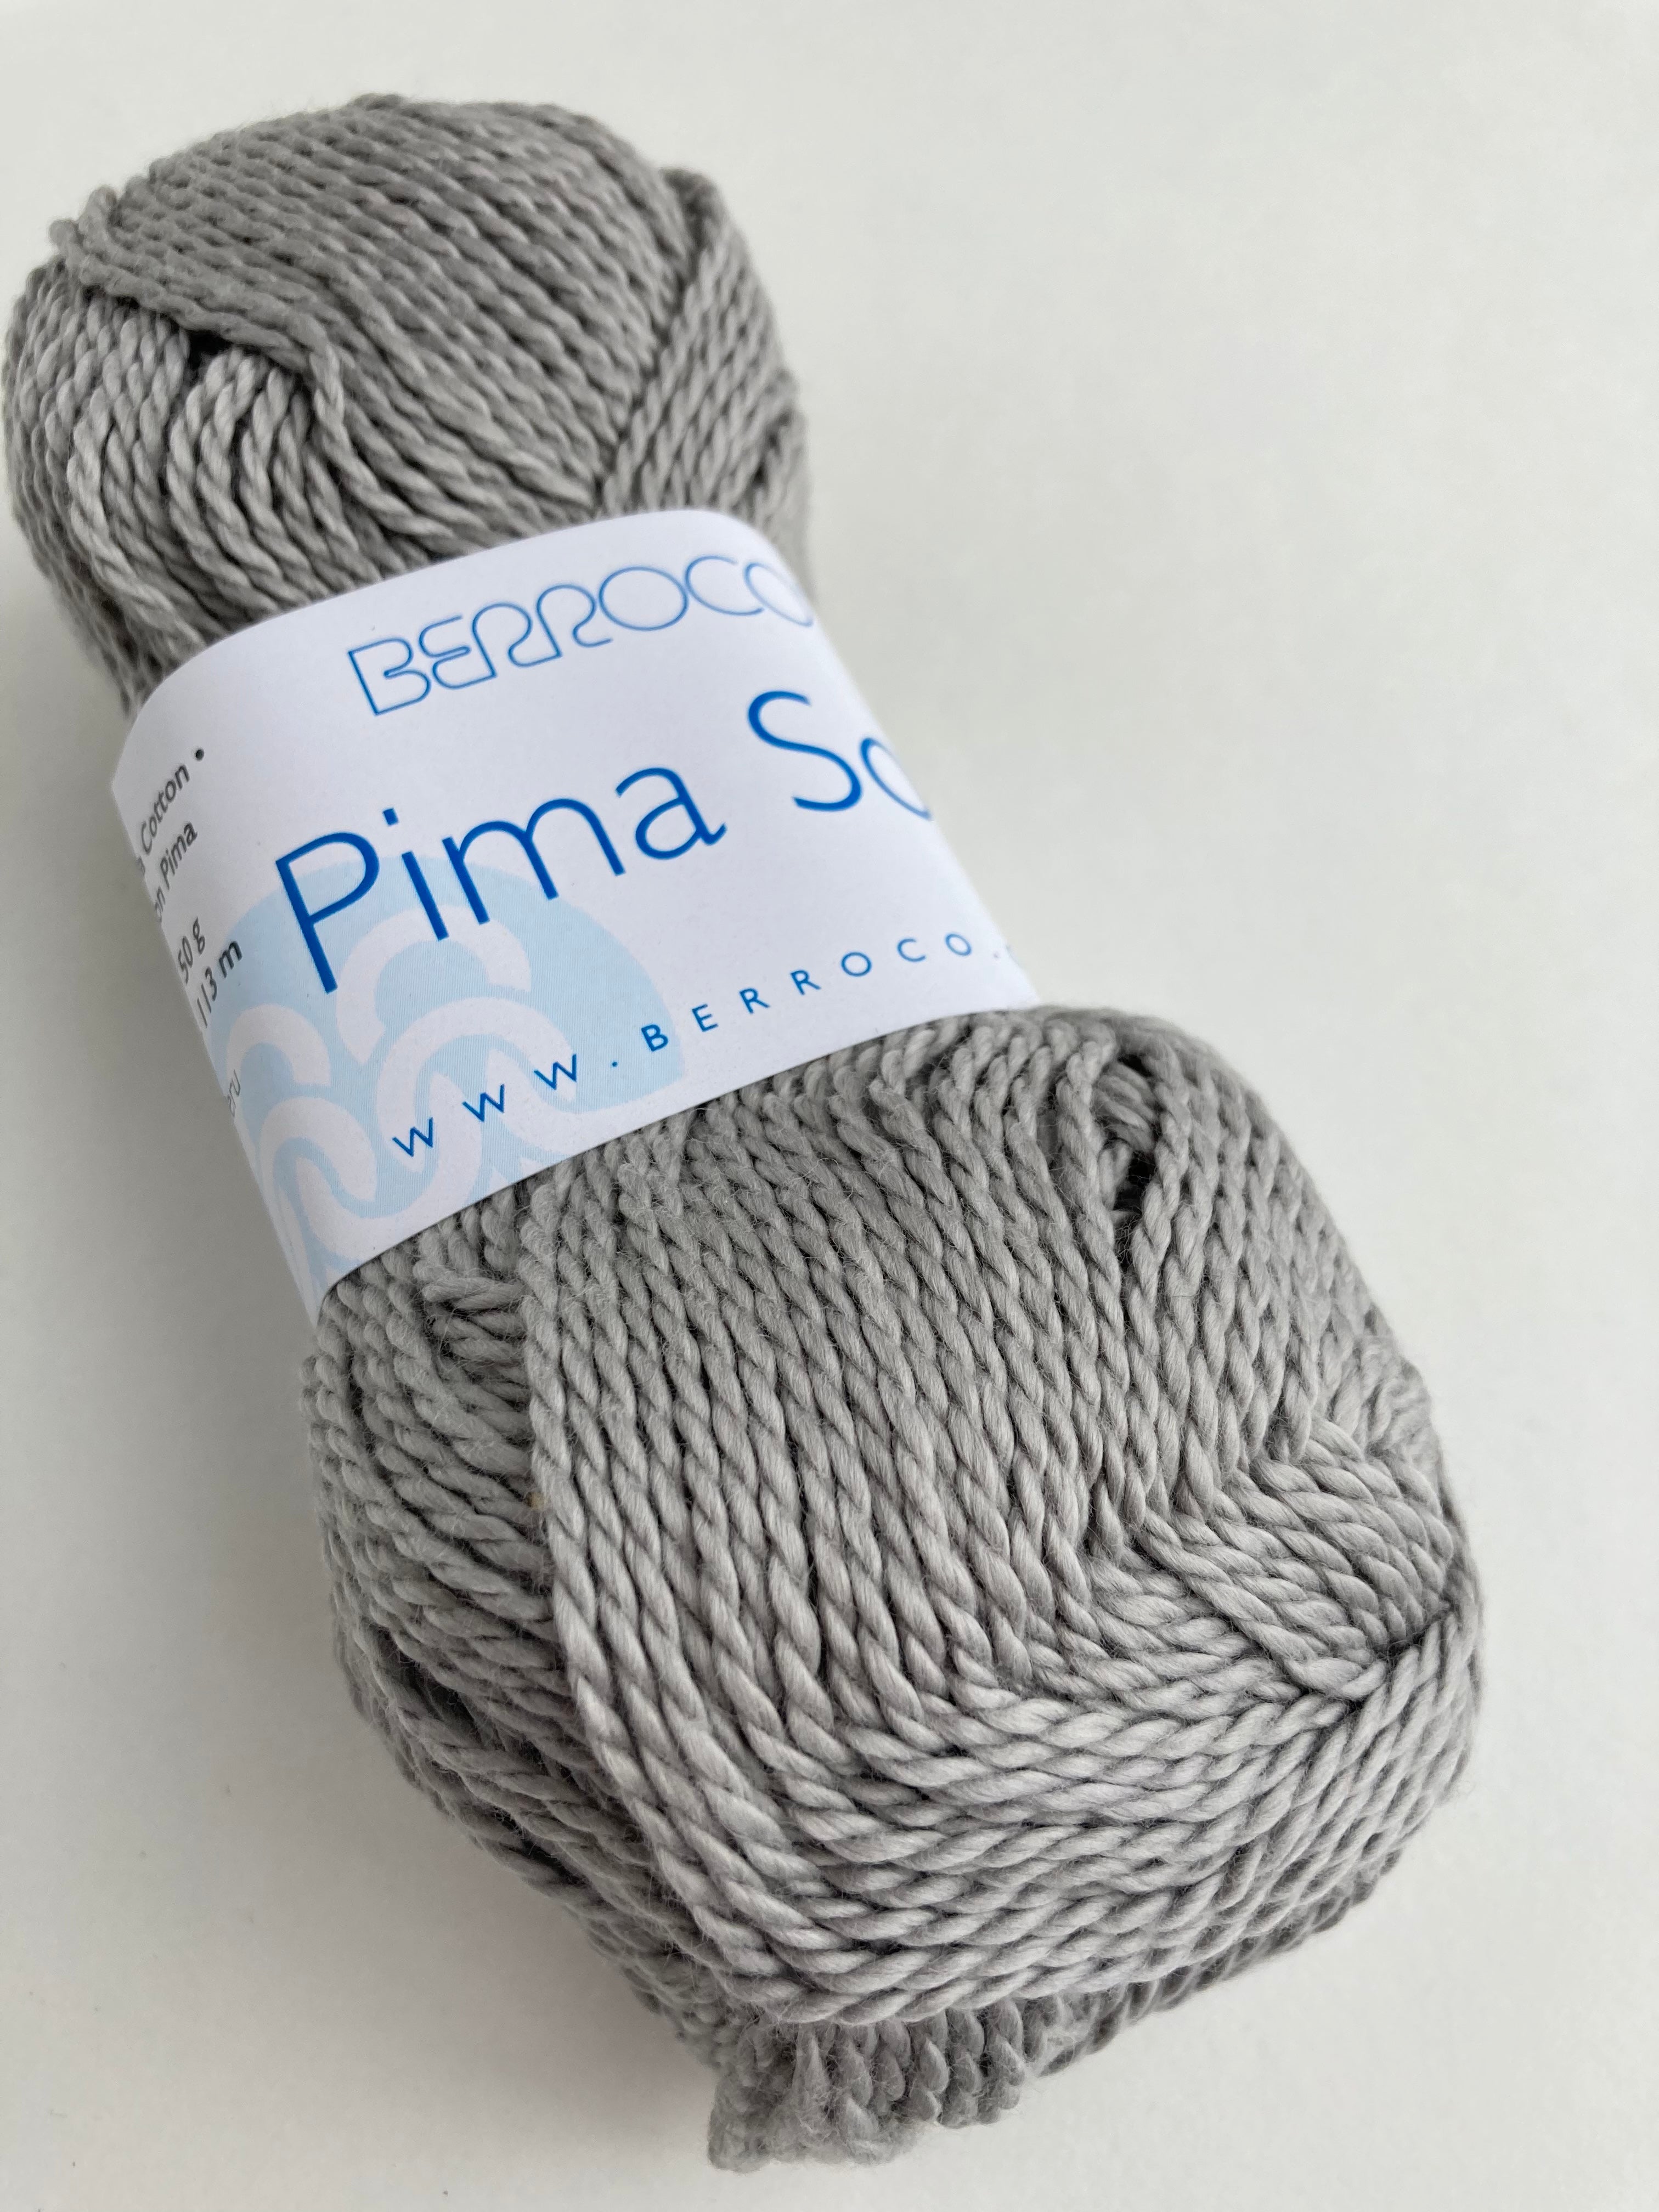 Slate 4621 - Pima Soft from Berroco